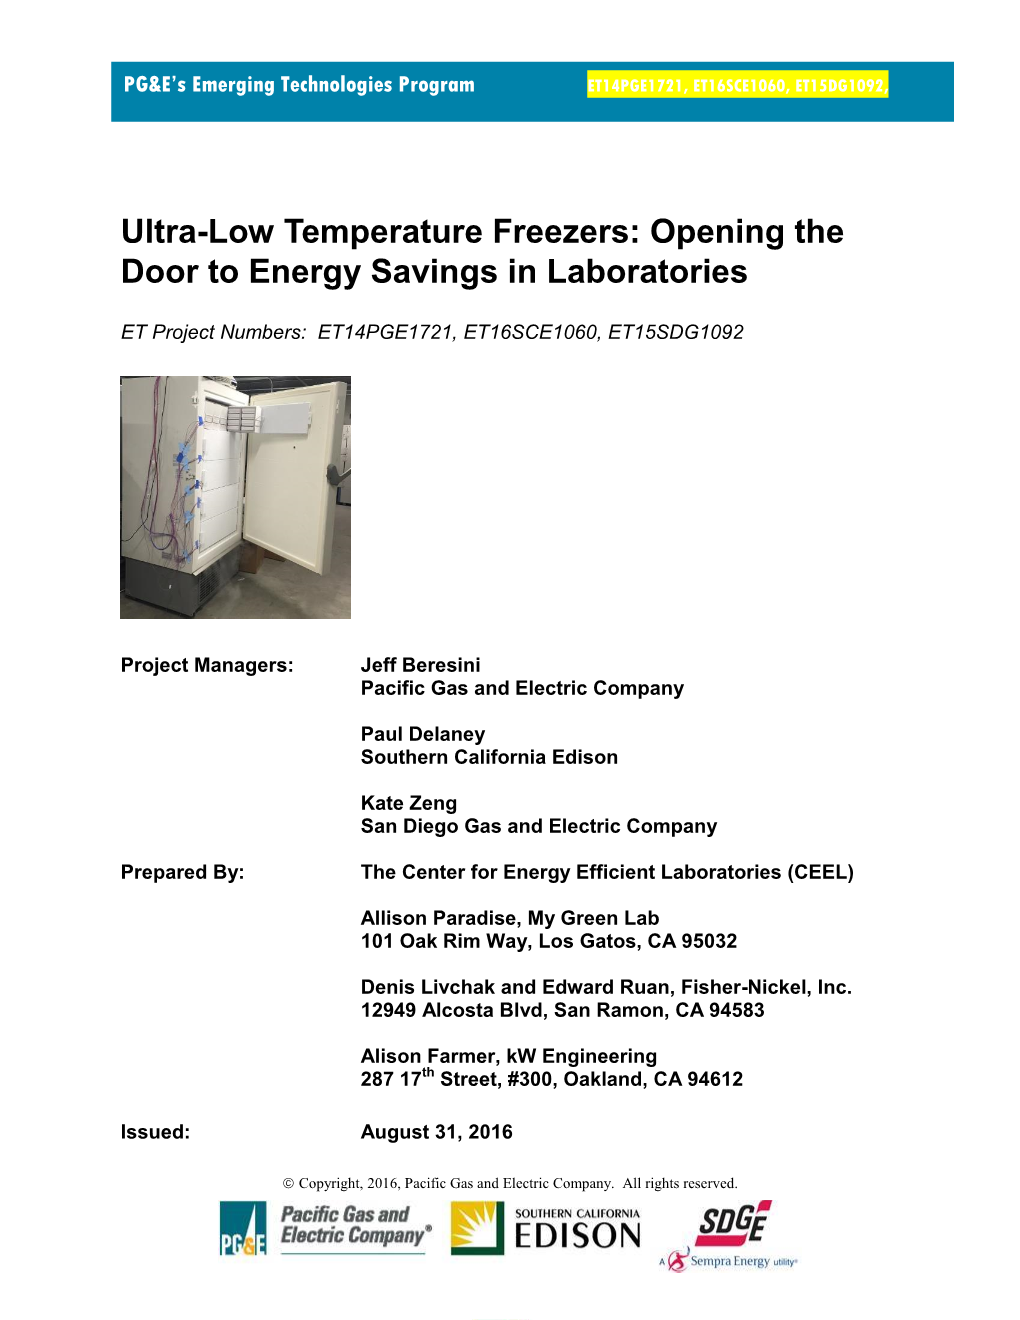 Ultra-Low Temperature Freezers: Opening the Door to Energy Savings in Laboratories